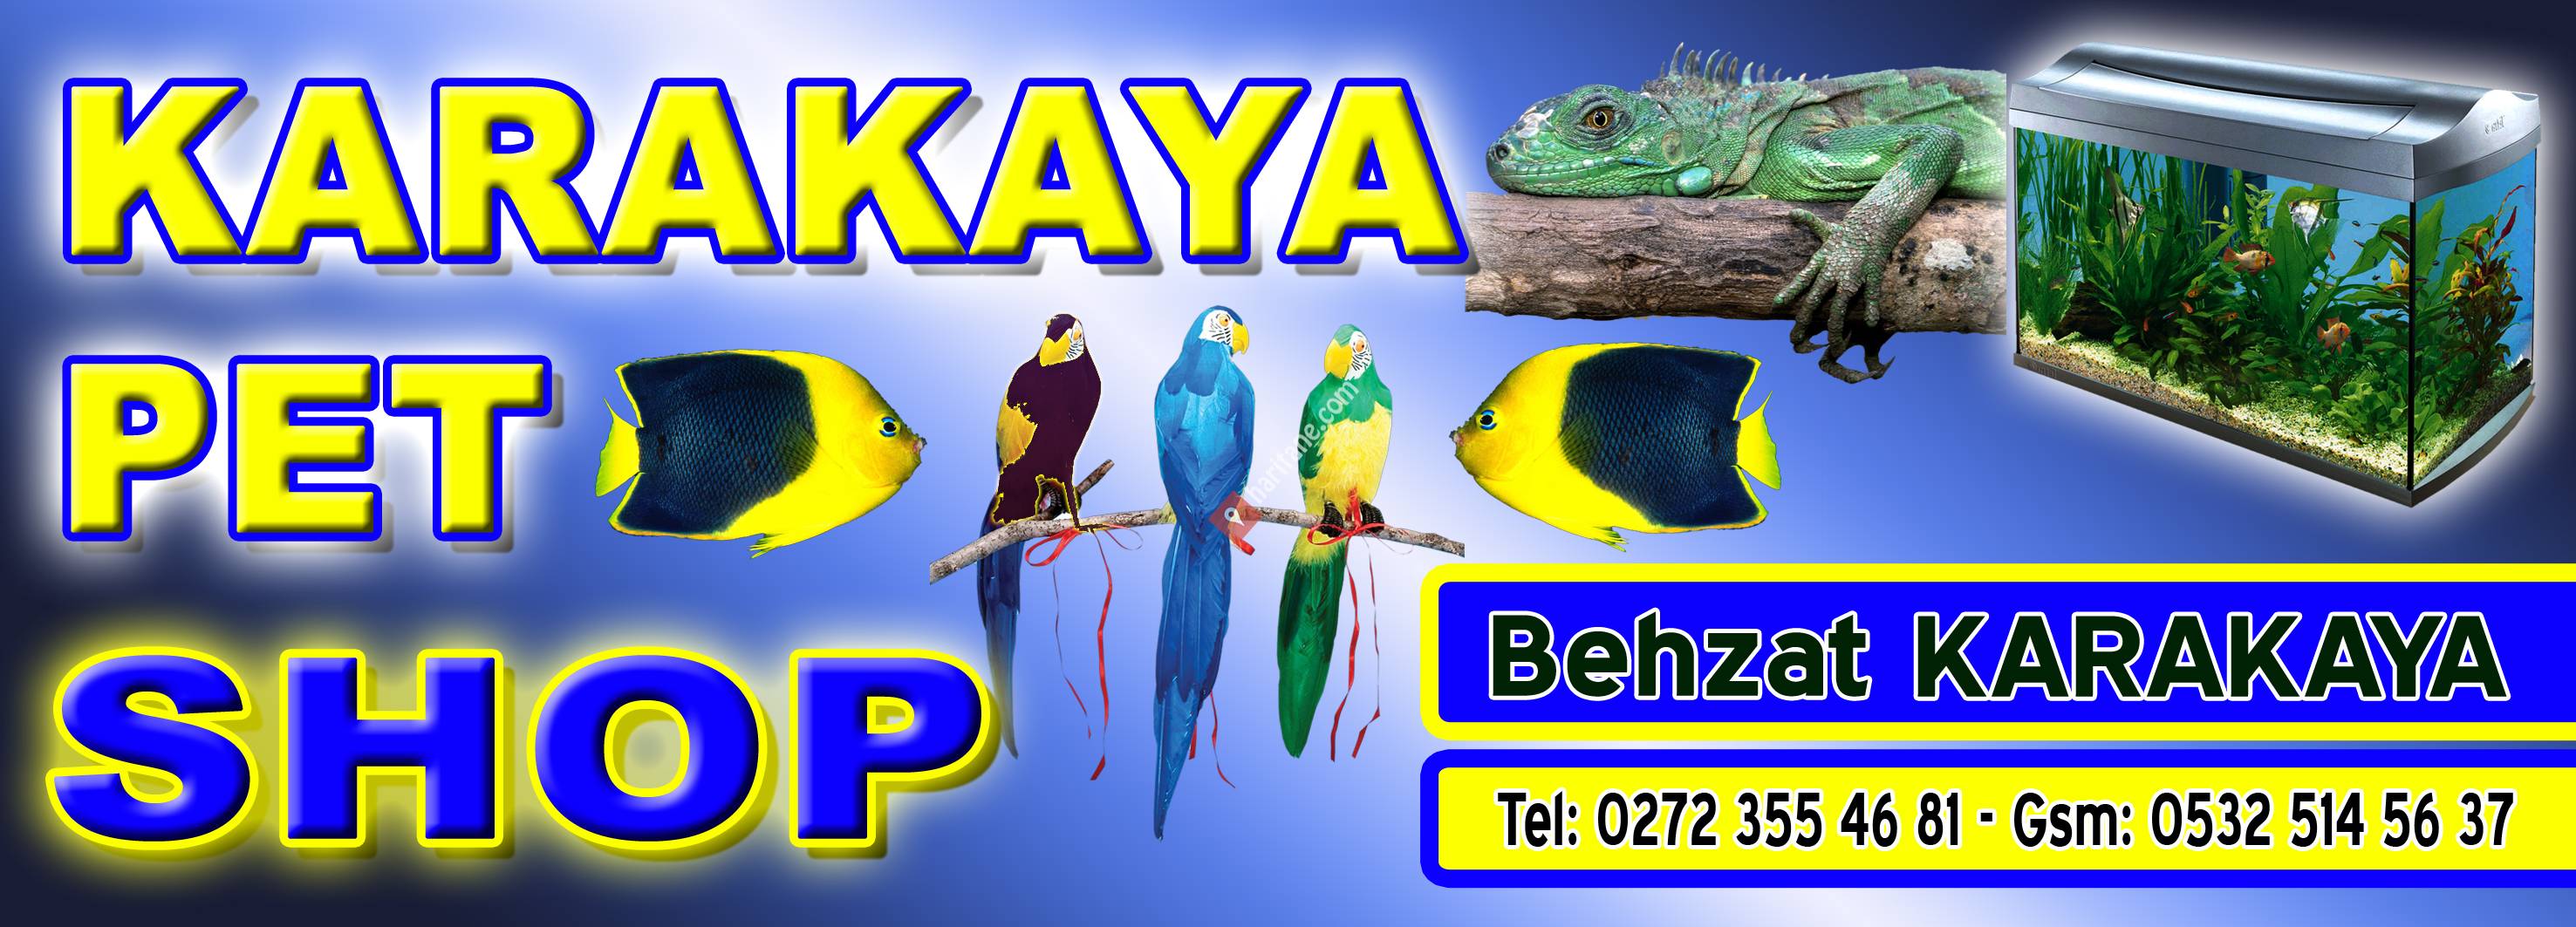 Karakaya Petshop